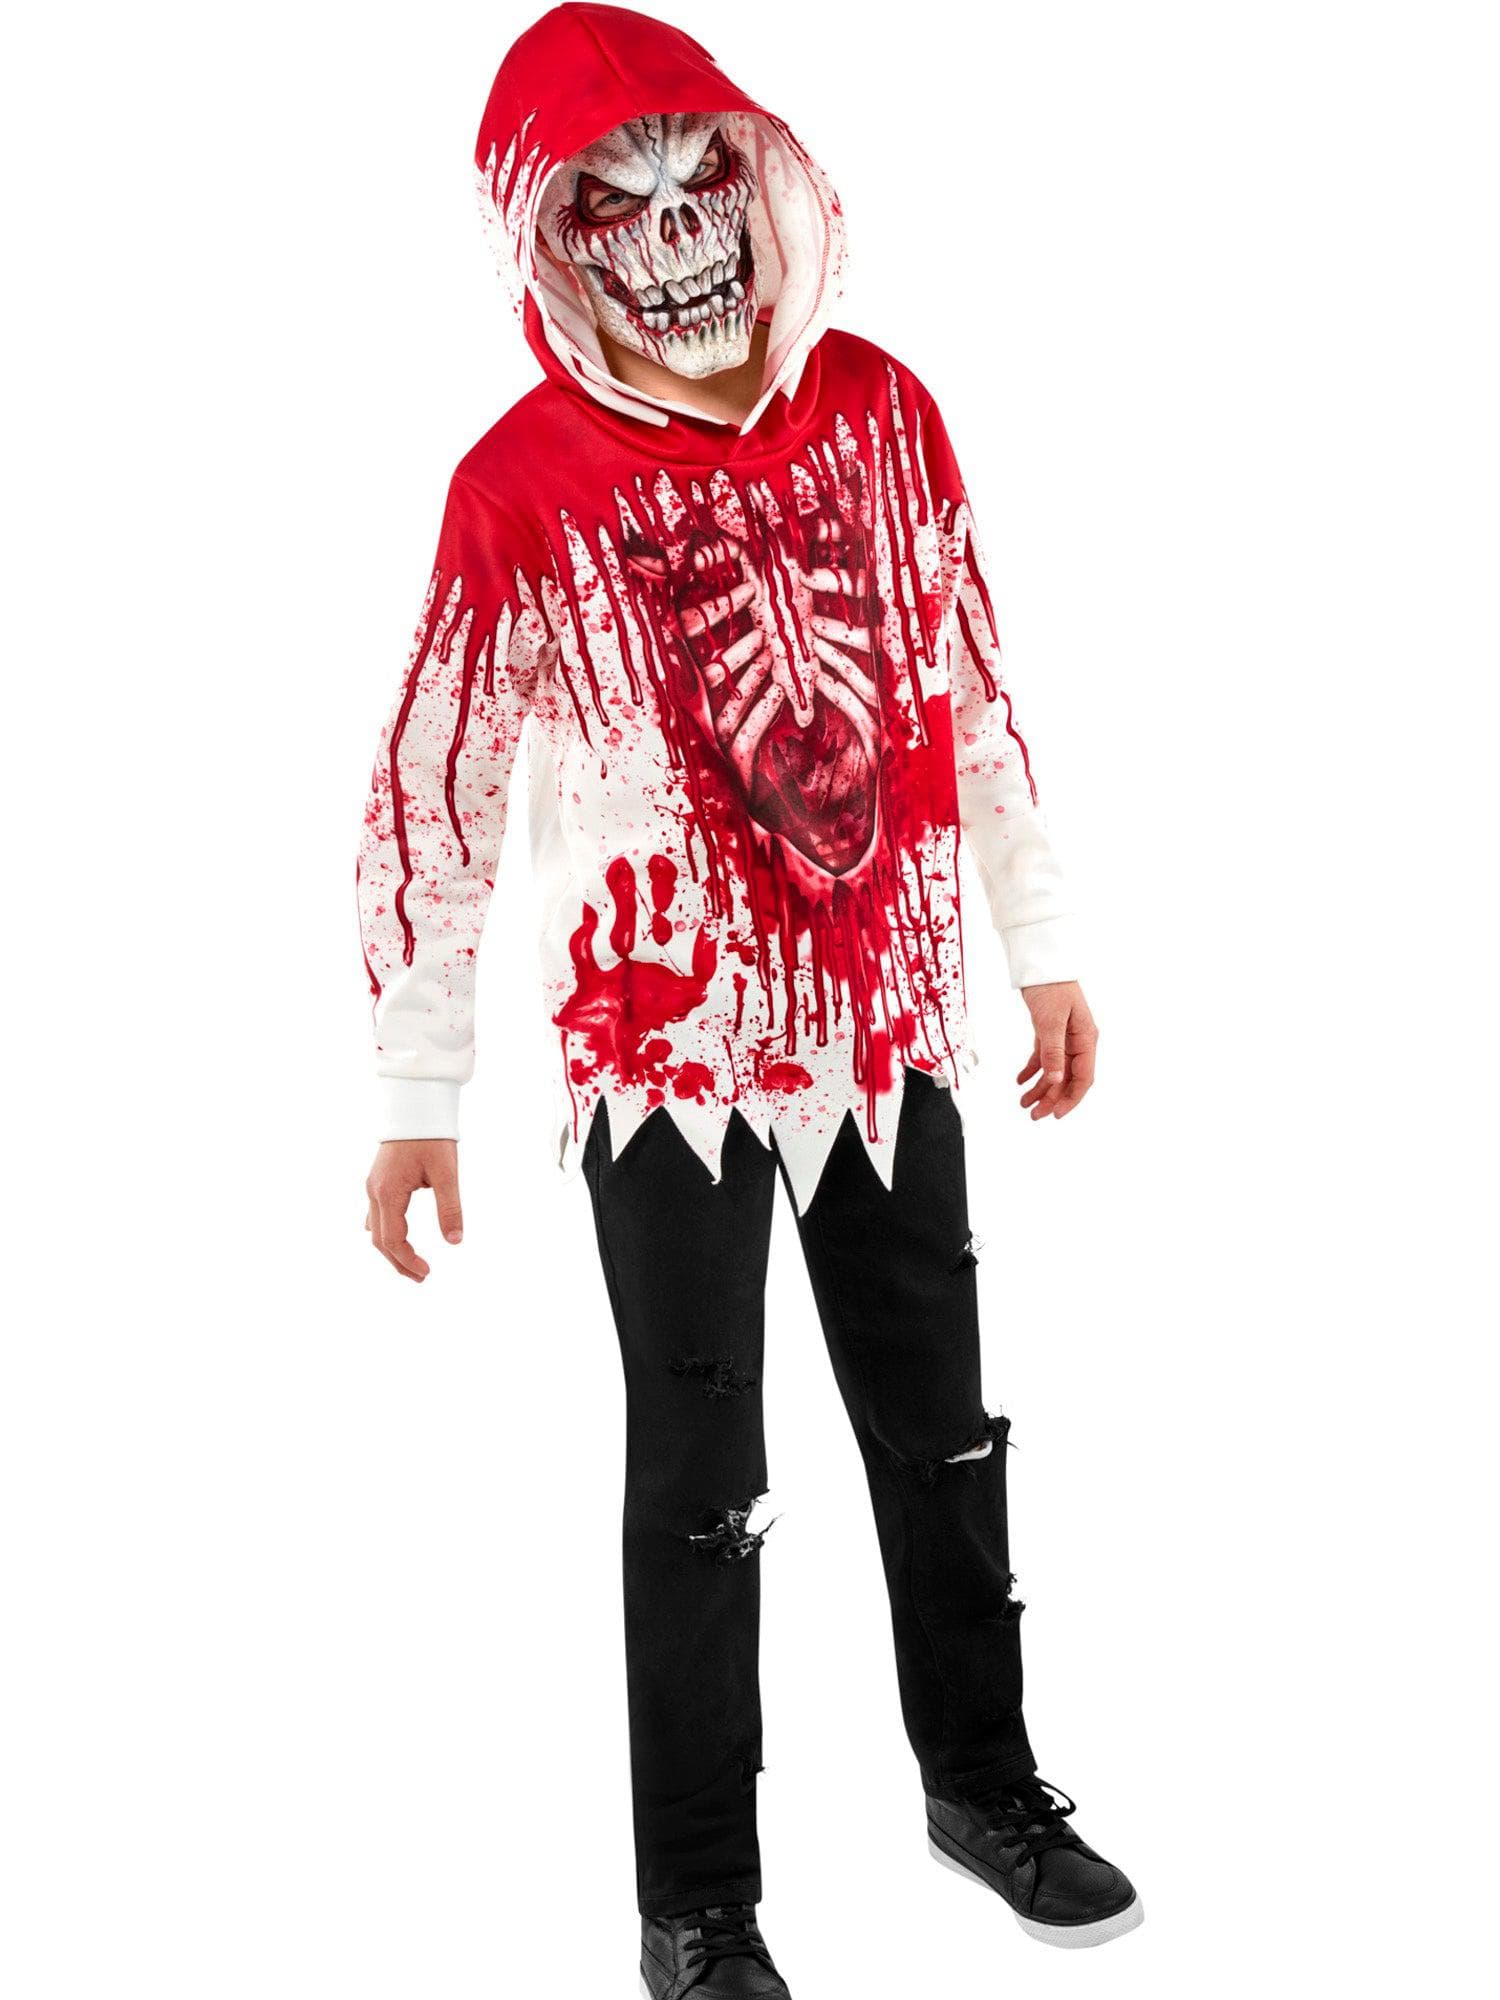 Bloody Mess Kids Costume - costumes.com